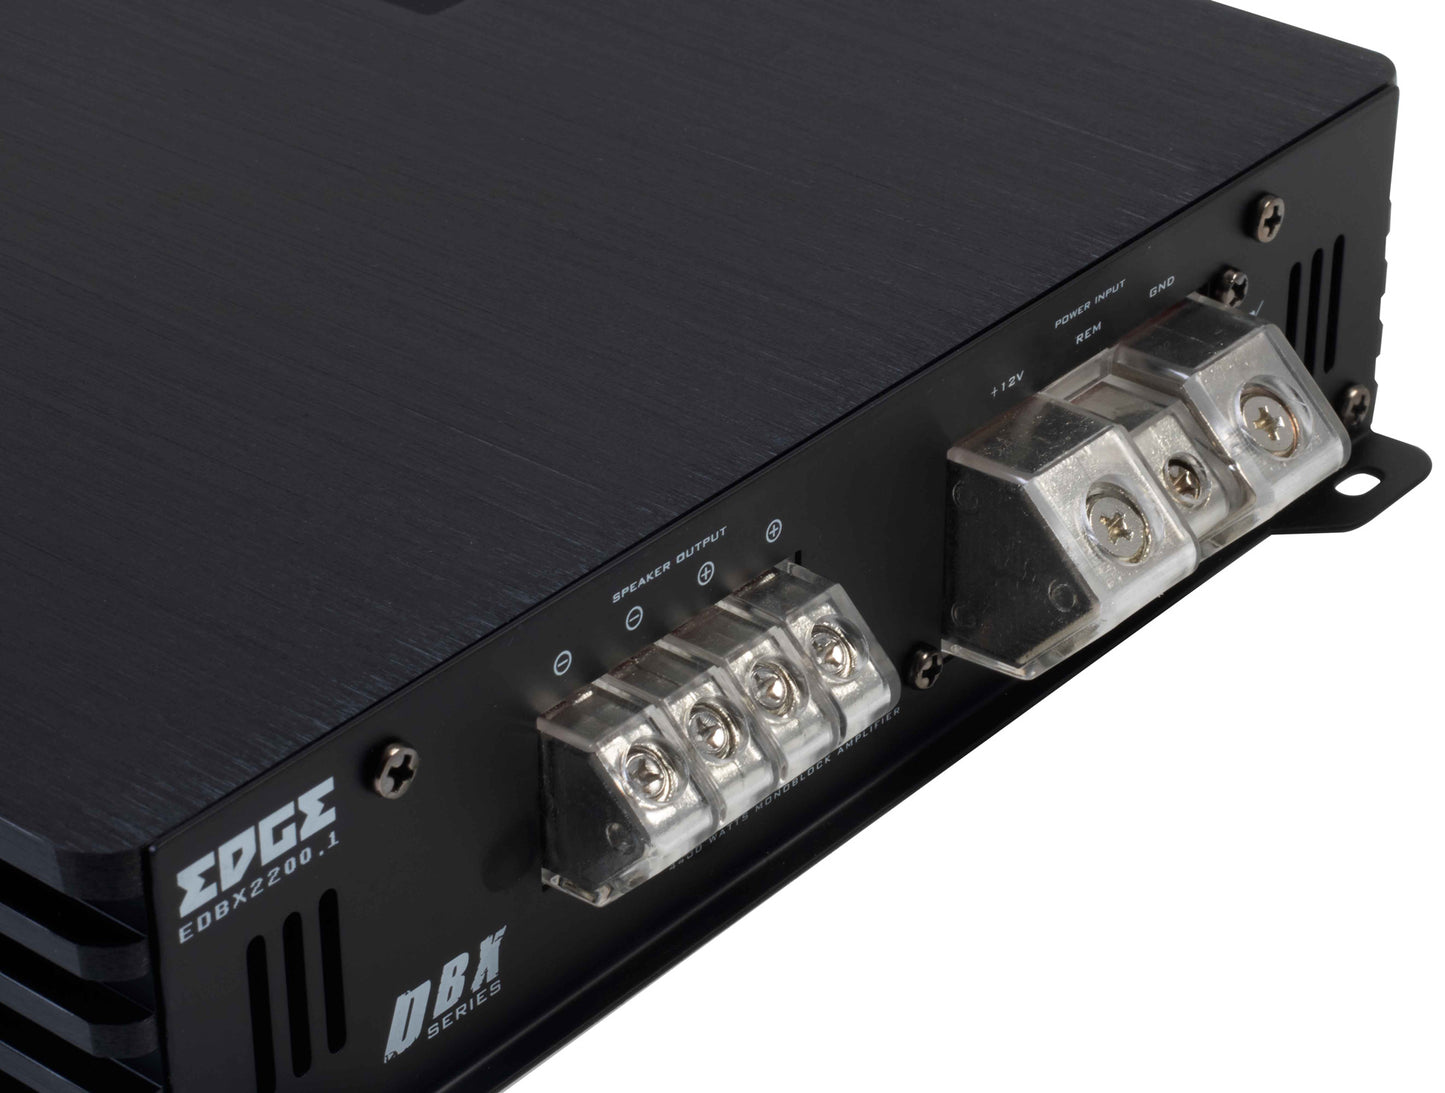 EDBX2200.1-E1 | EDGE DBX Series Monoblock 4400 watts Amplifier